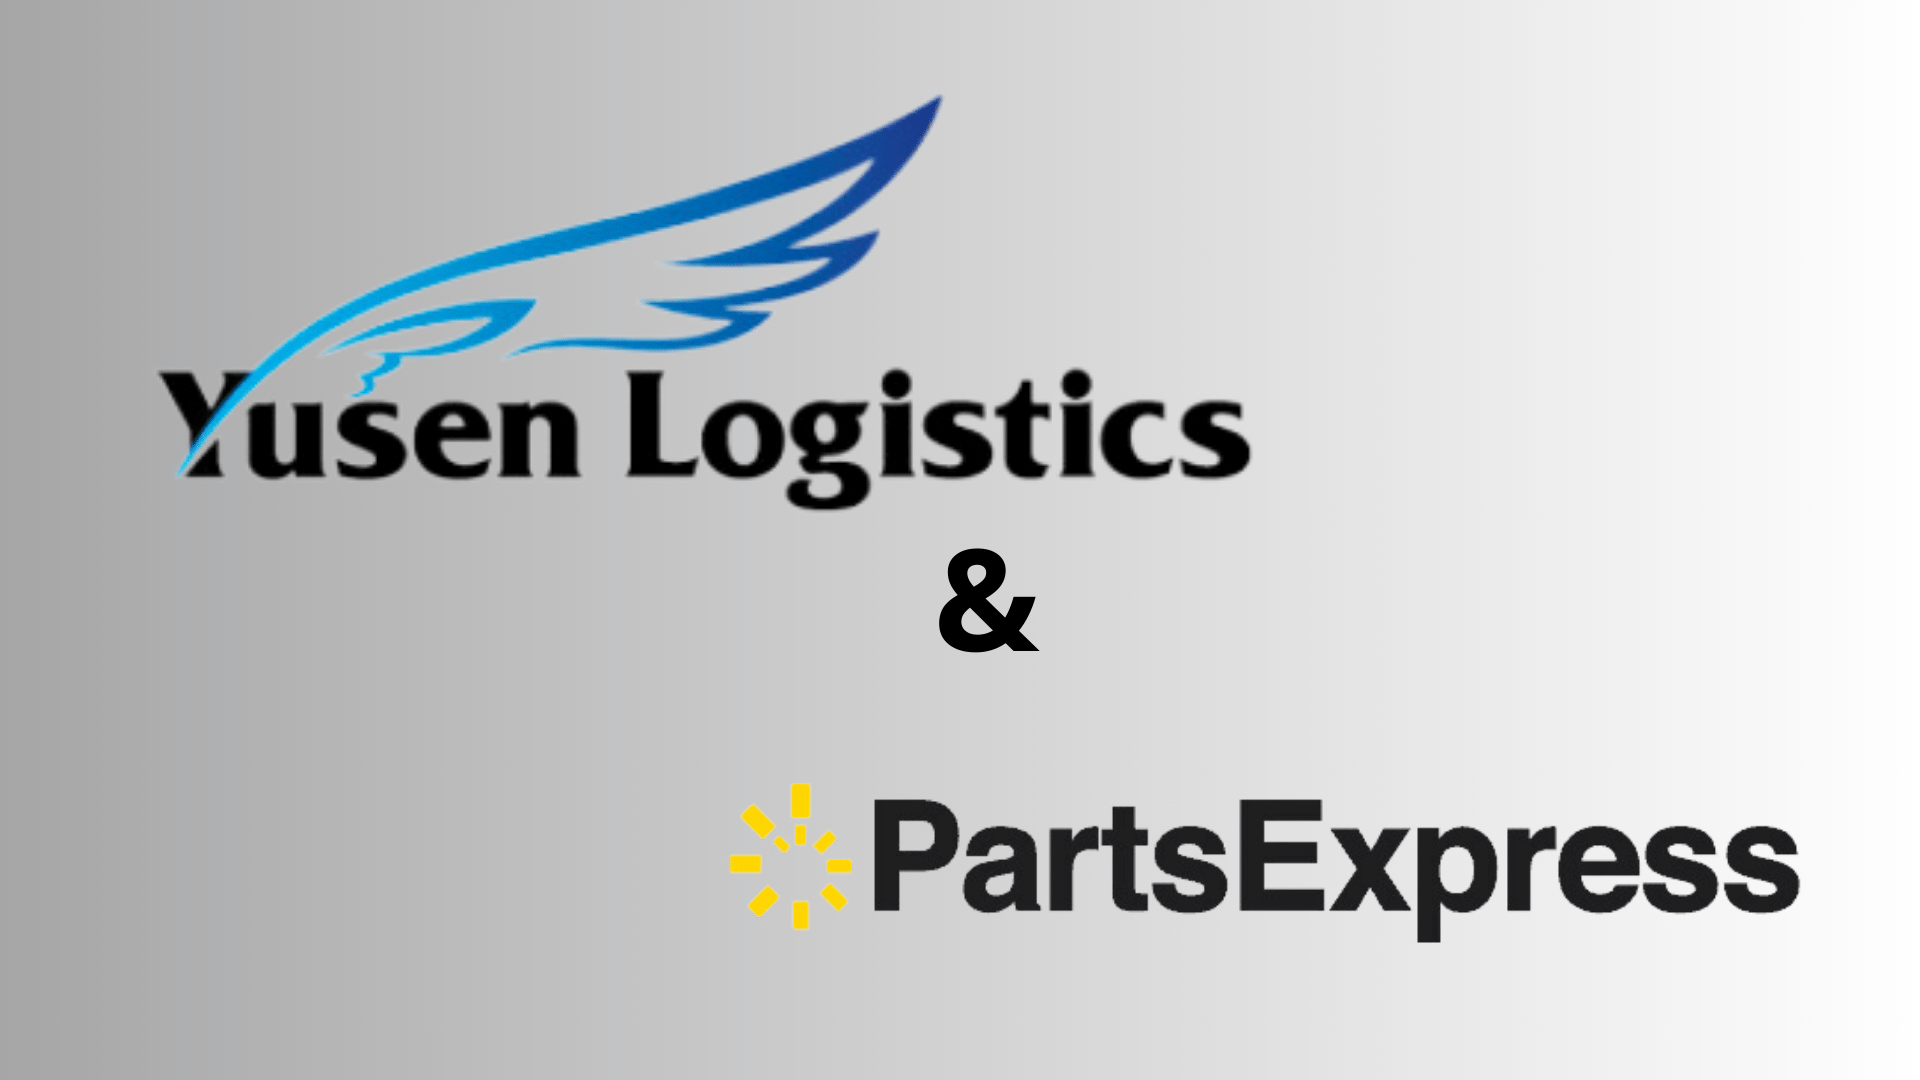 Yusen Logistics (Benelux) B.V. a l’intention d’acquérir PartsExpress B.V.